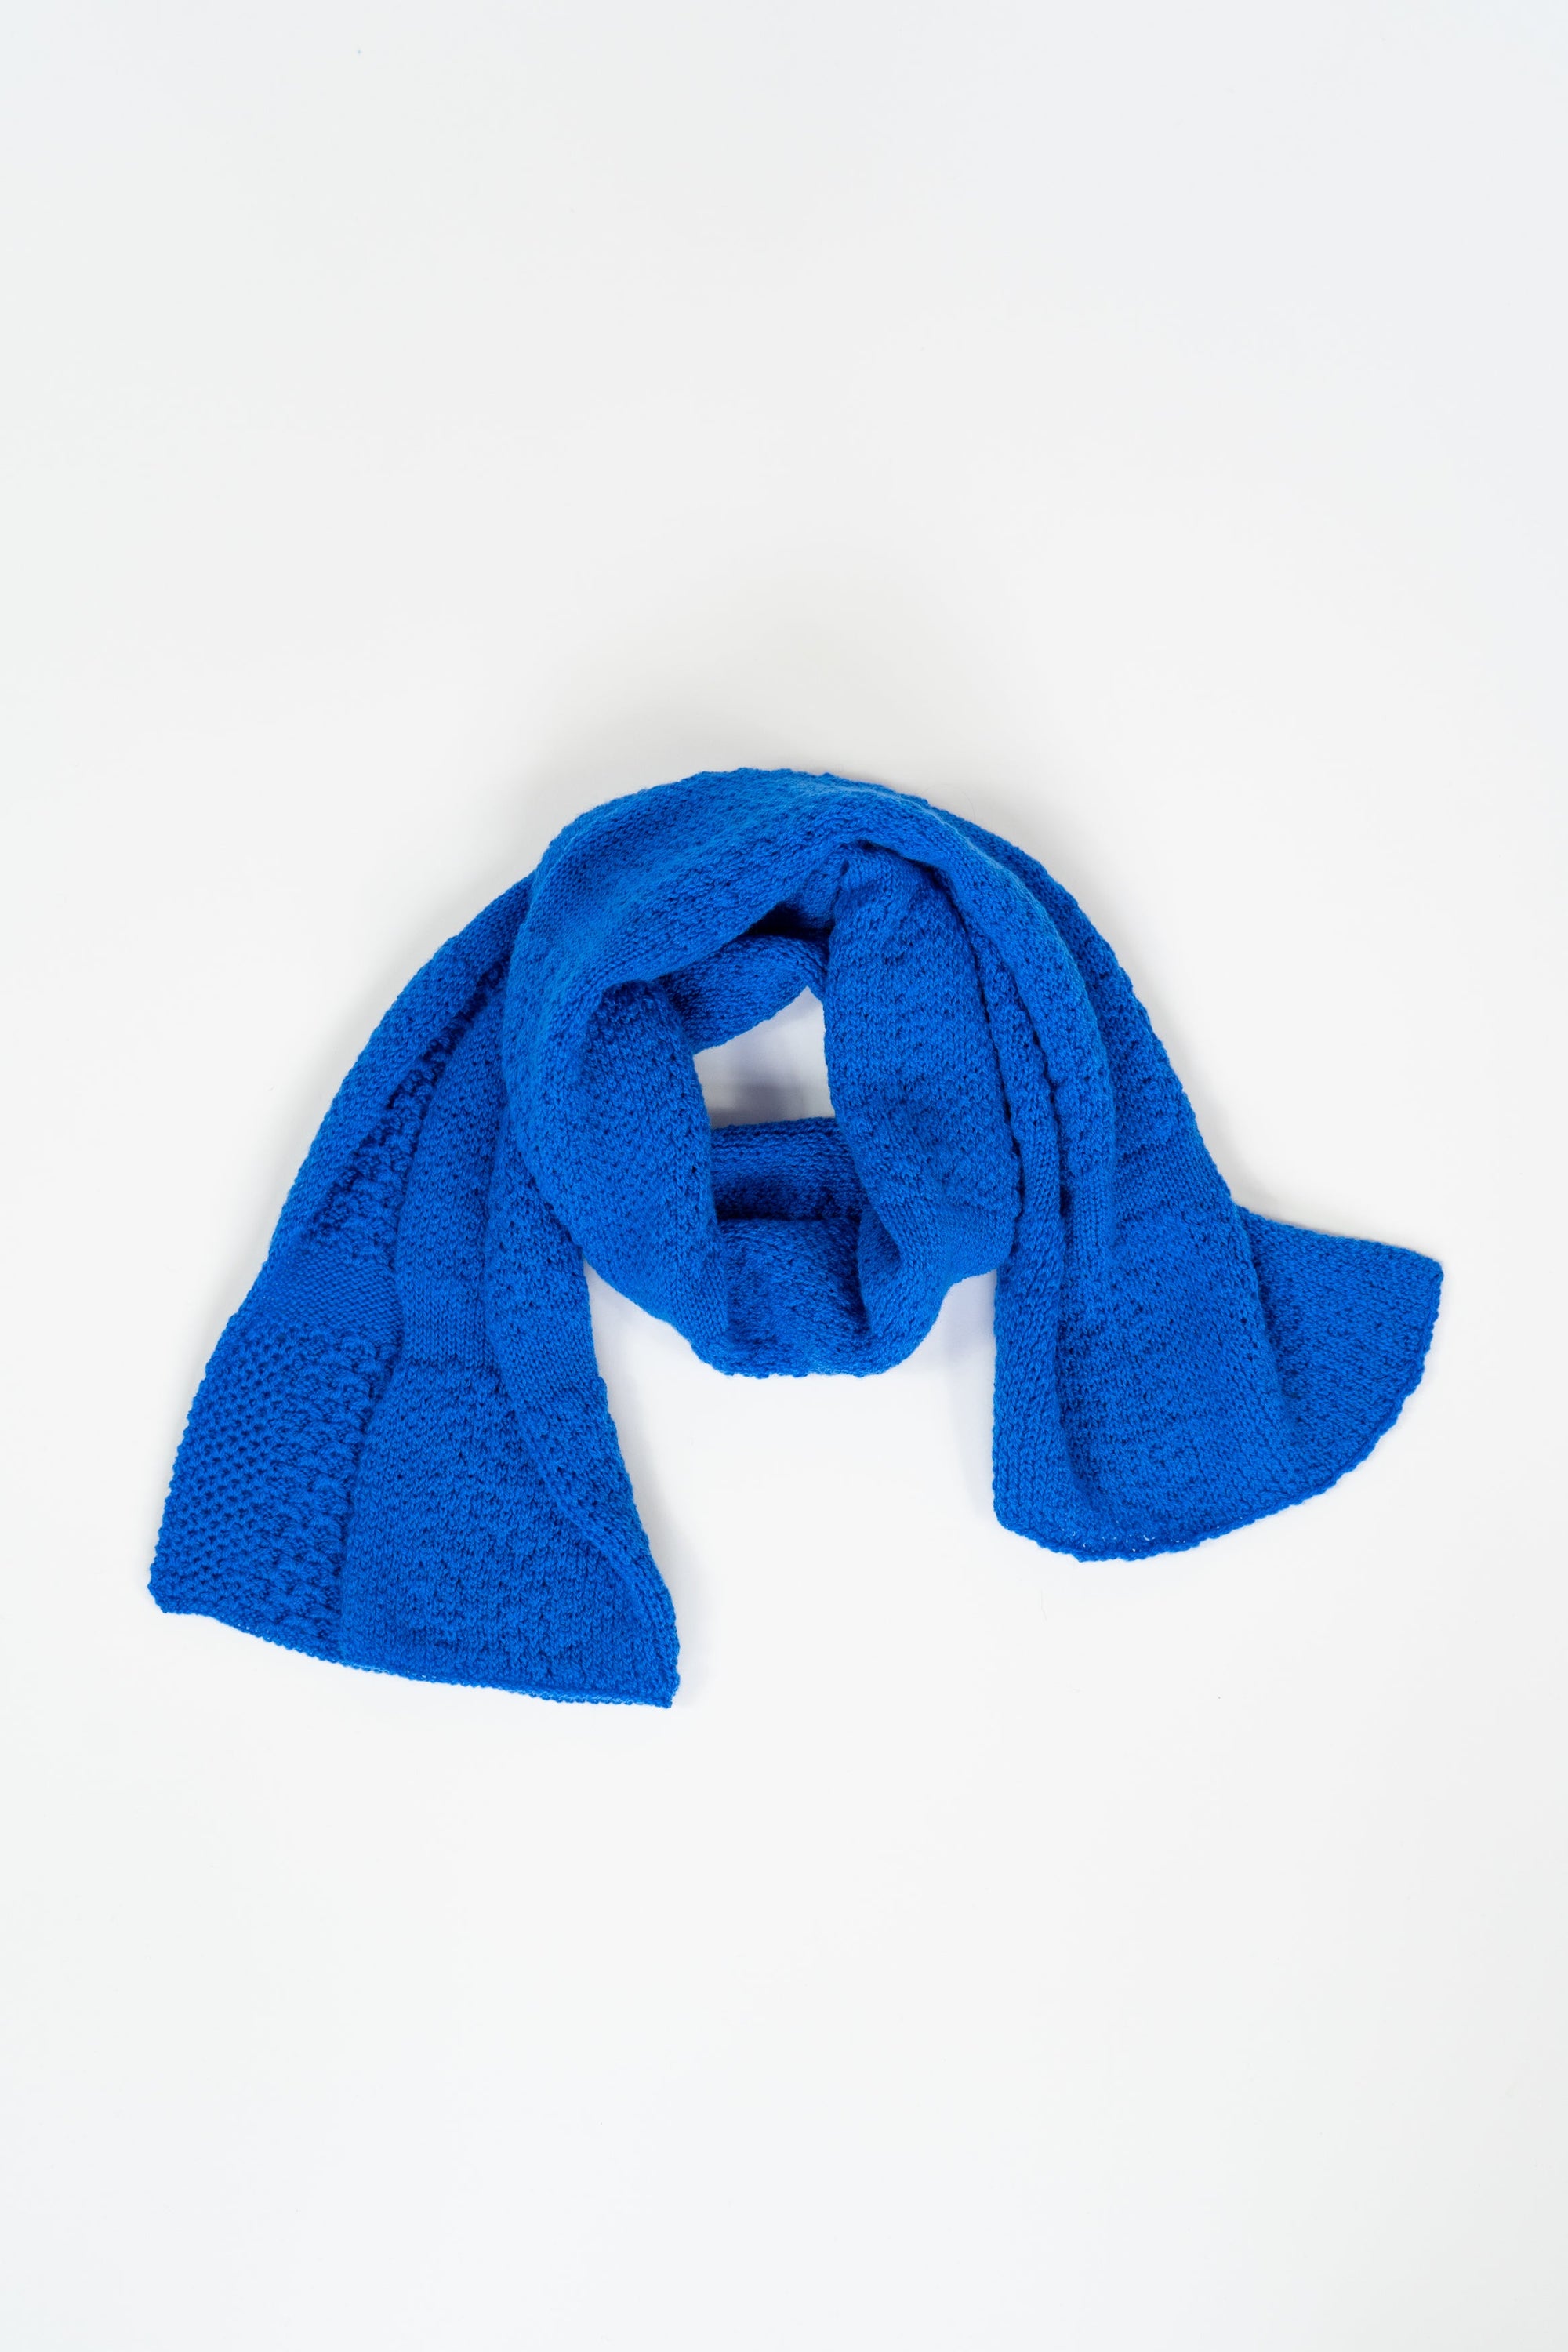 Klein Blue Small Merino Scarf-Scarves & Shawls-STABLE of Ireland